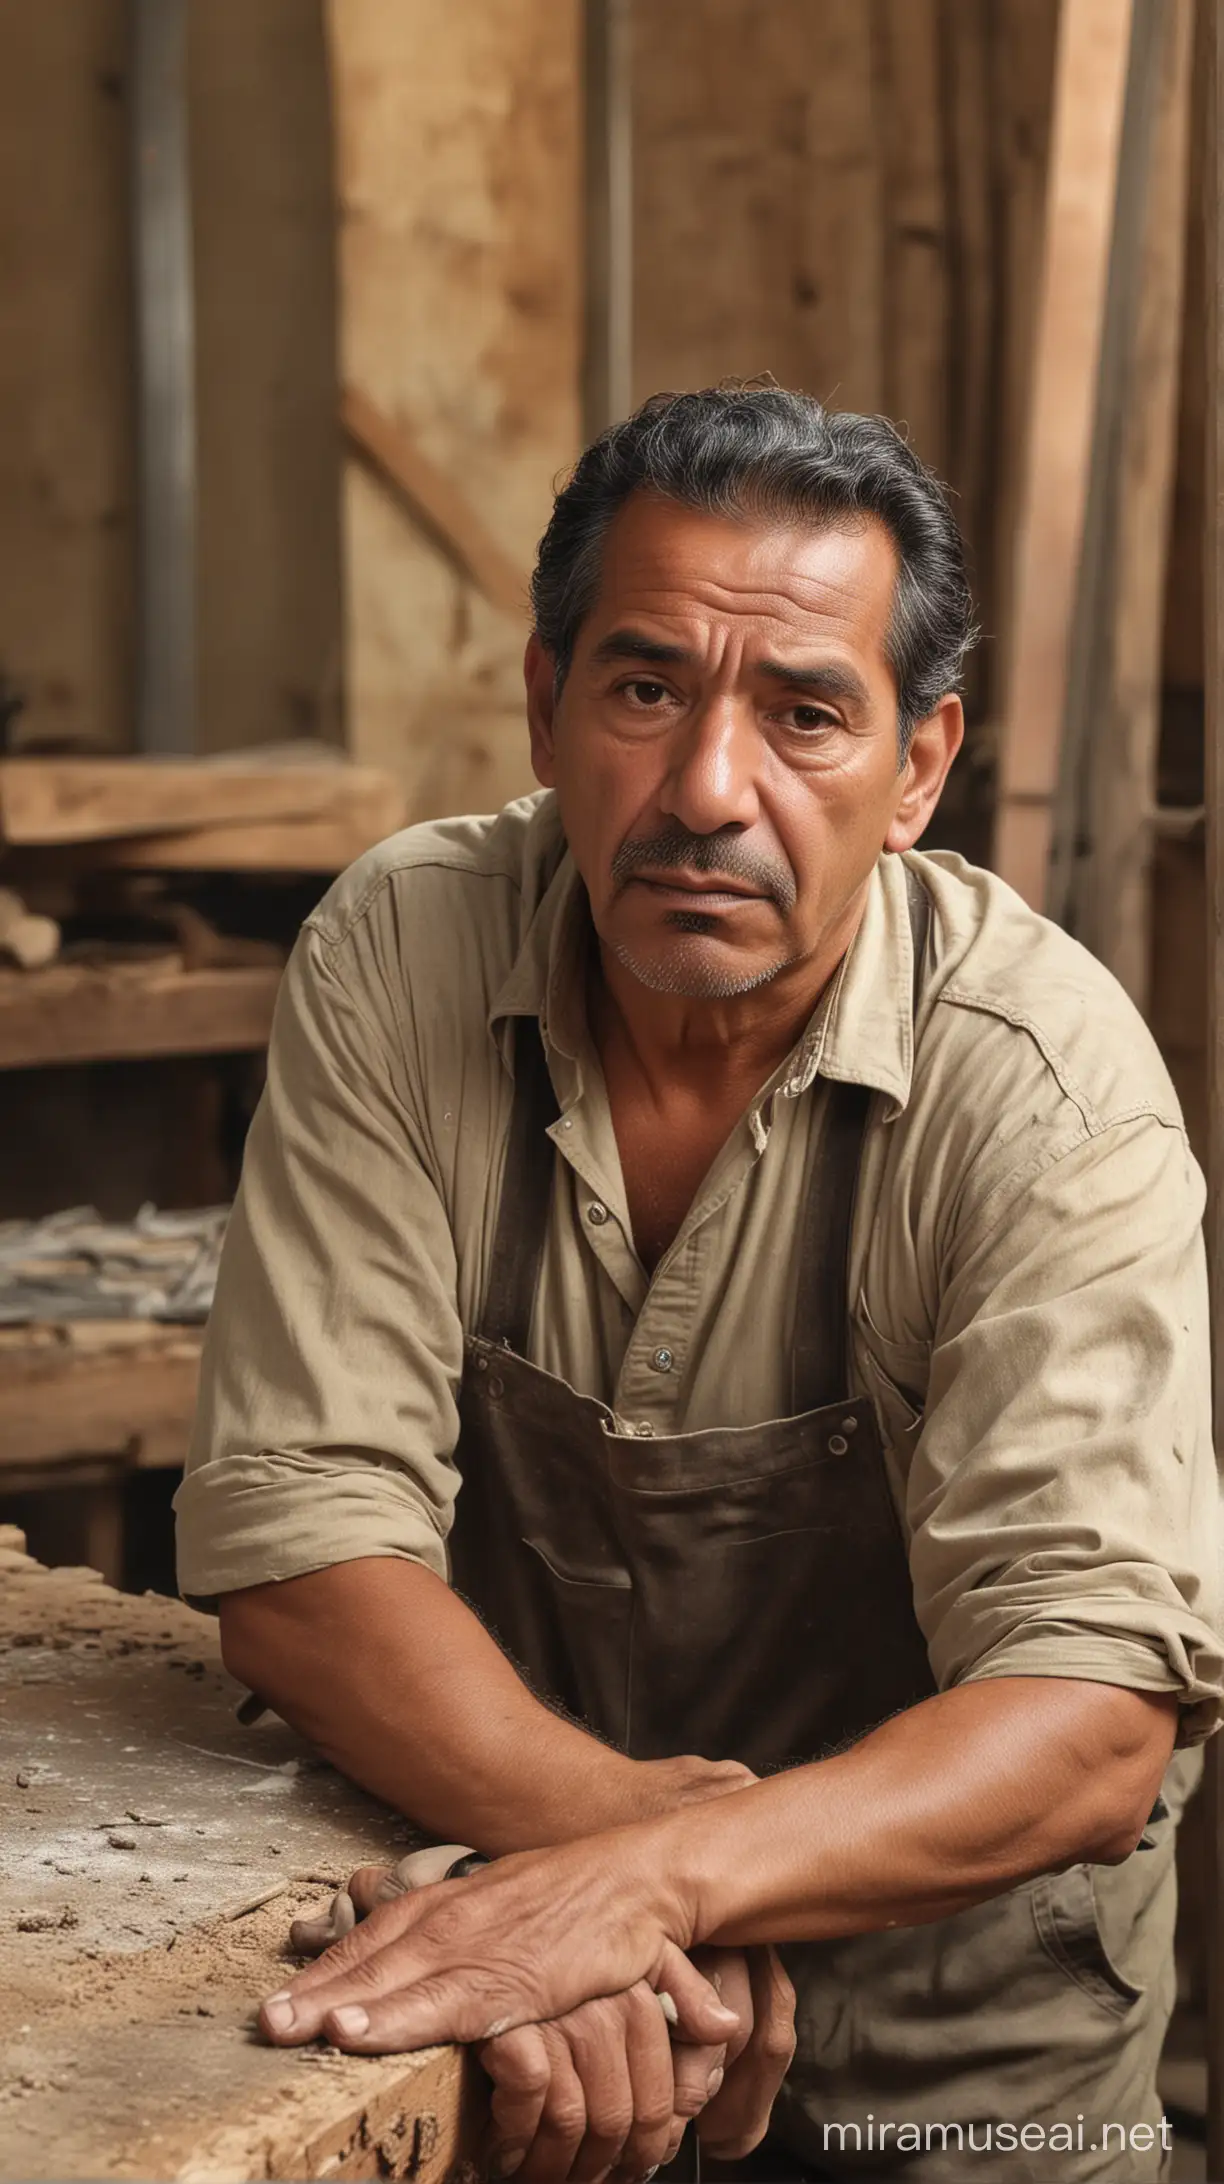 sad 55 year old hispanic man in dusty wood workshop